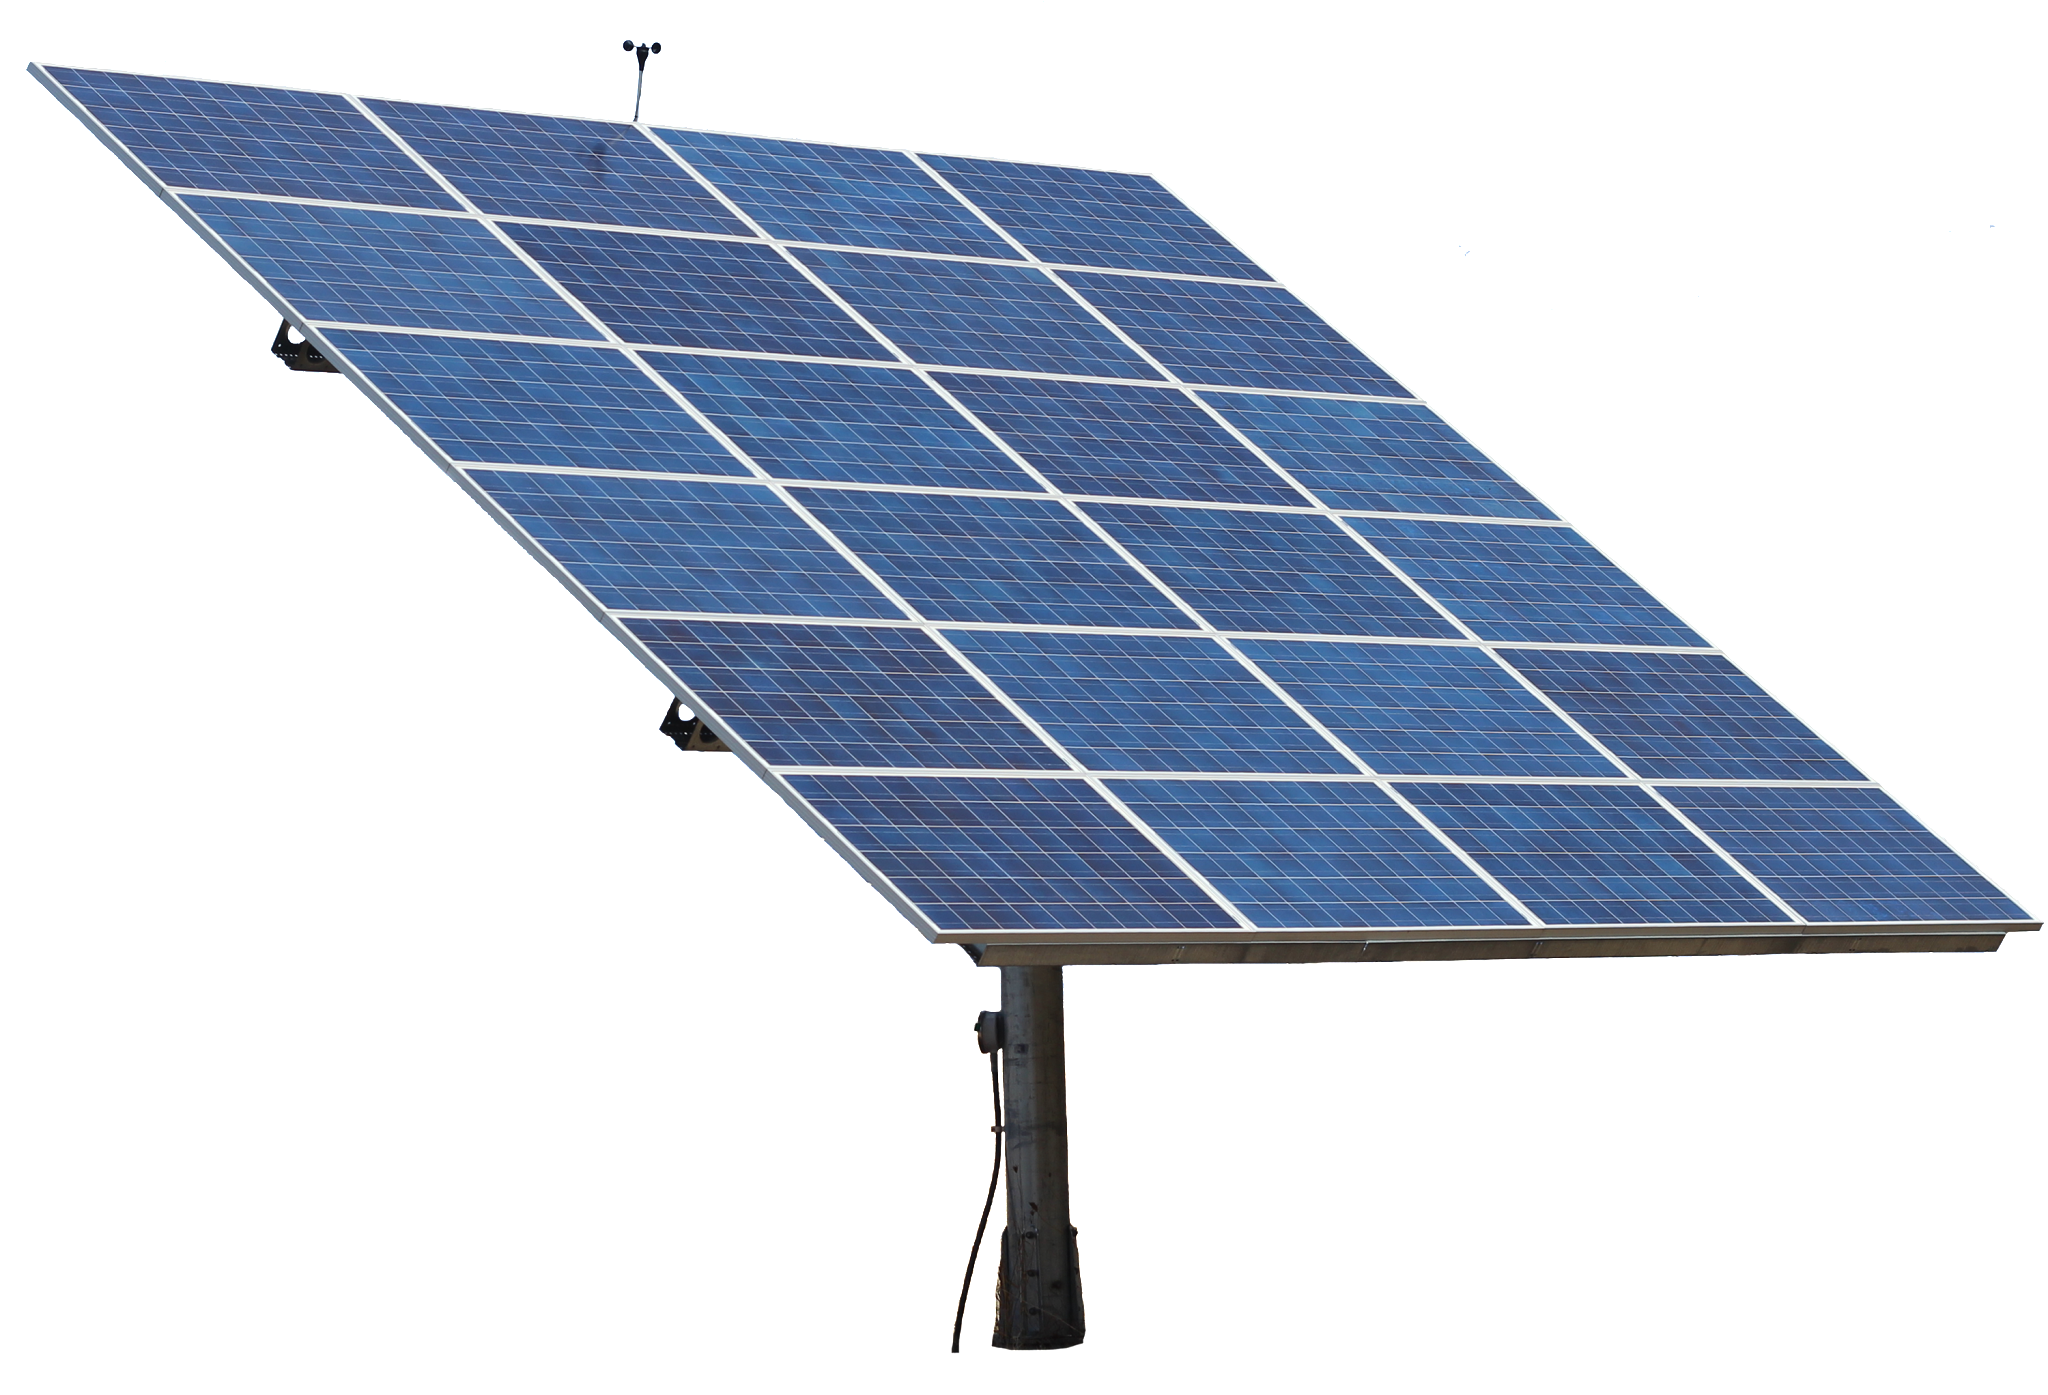 PNG -Datei mit Solarenergie